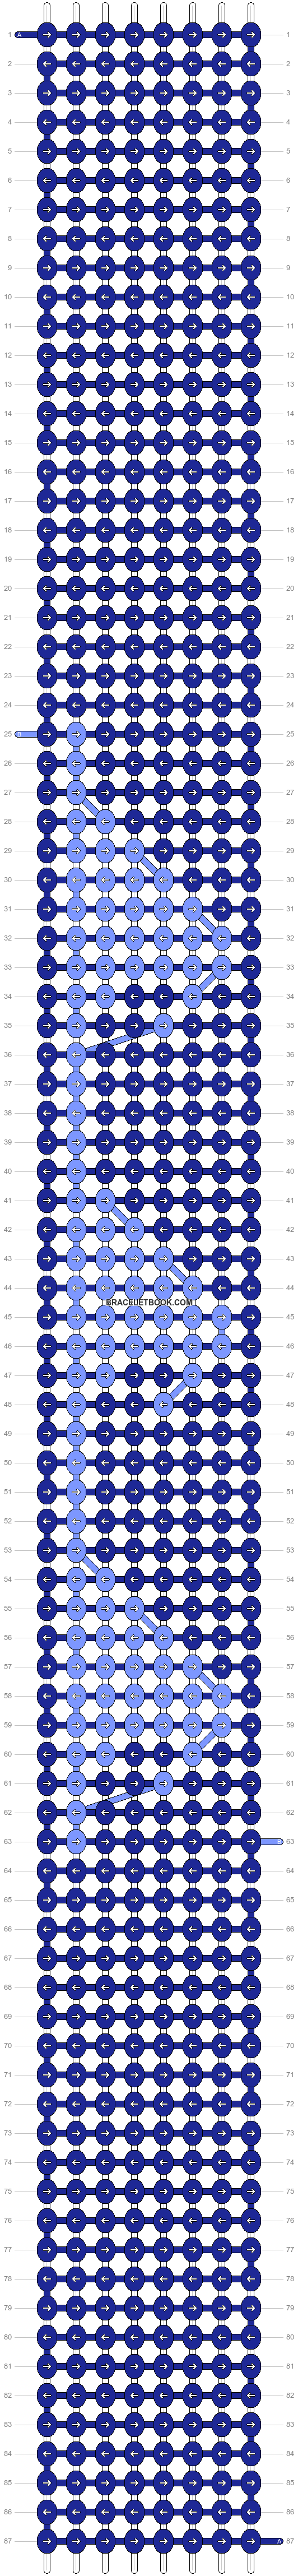 Alpha pattern #57530 variation #100649 pattern